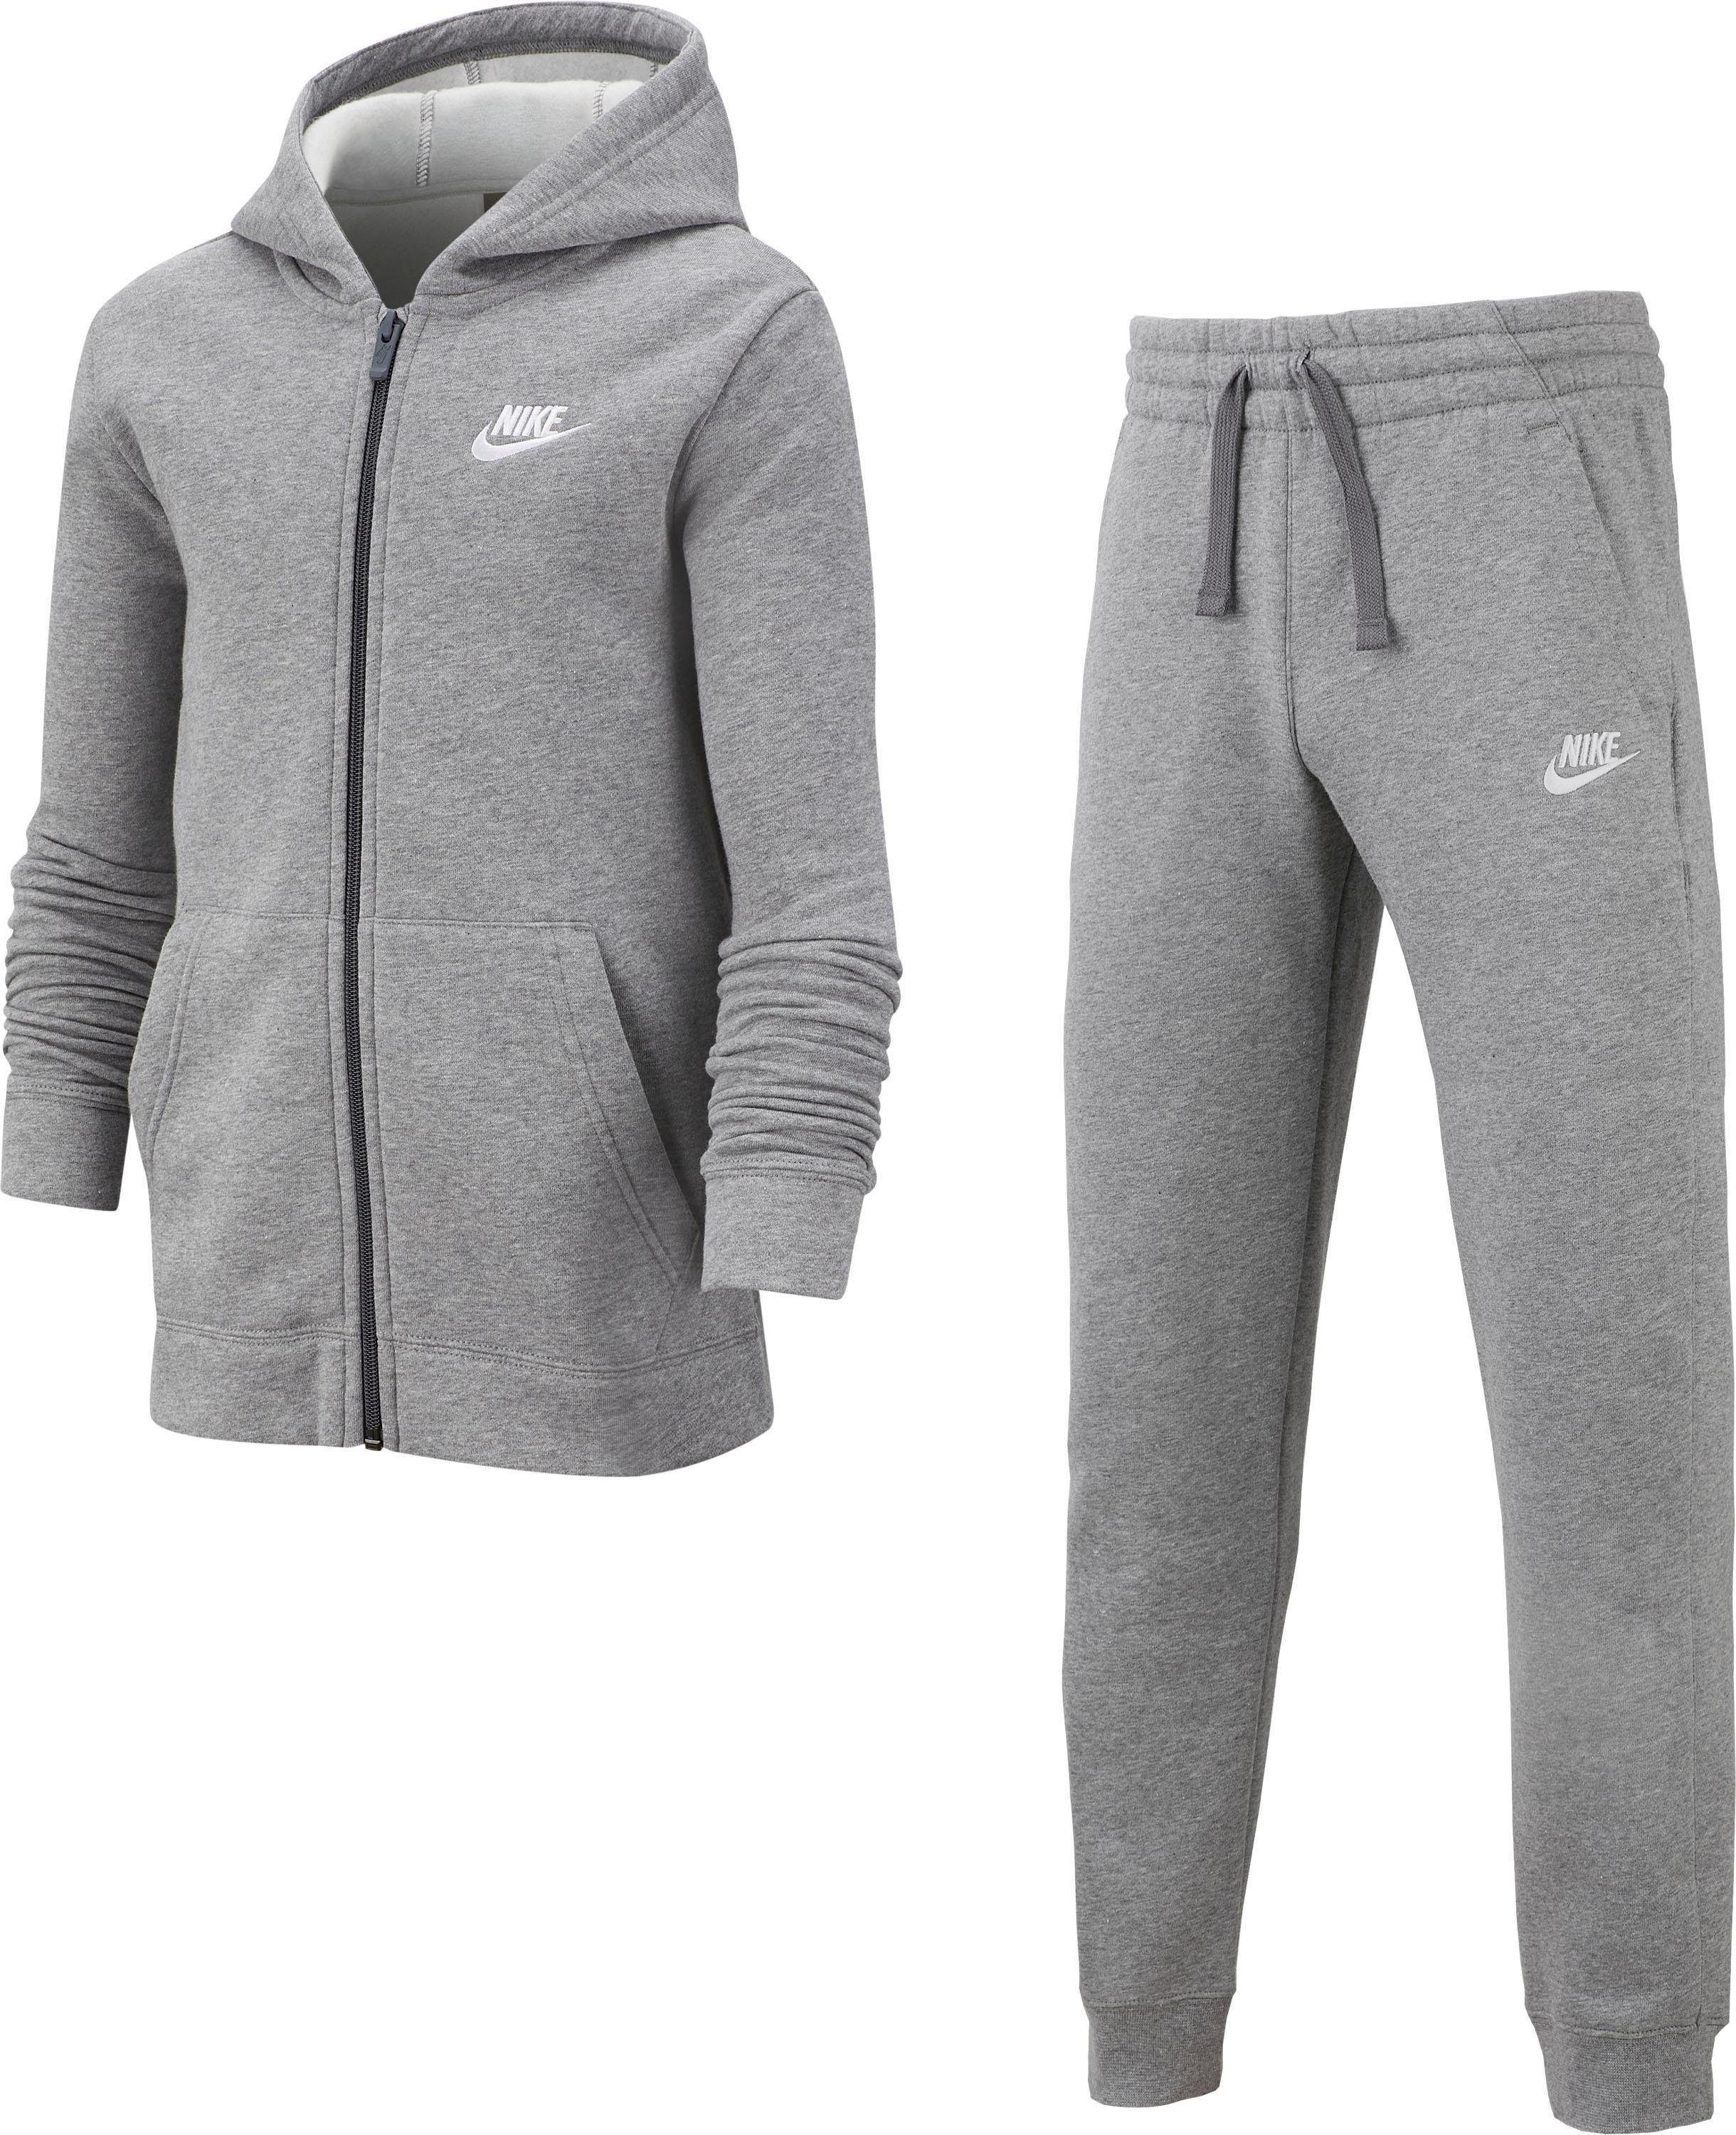 Nike Sportswear Jogginganzug NSW CORE für (Set, grau-meliert 2-tlg), Kinder